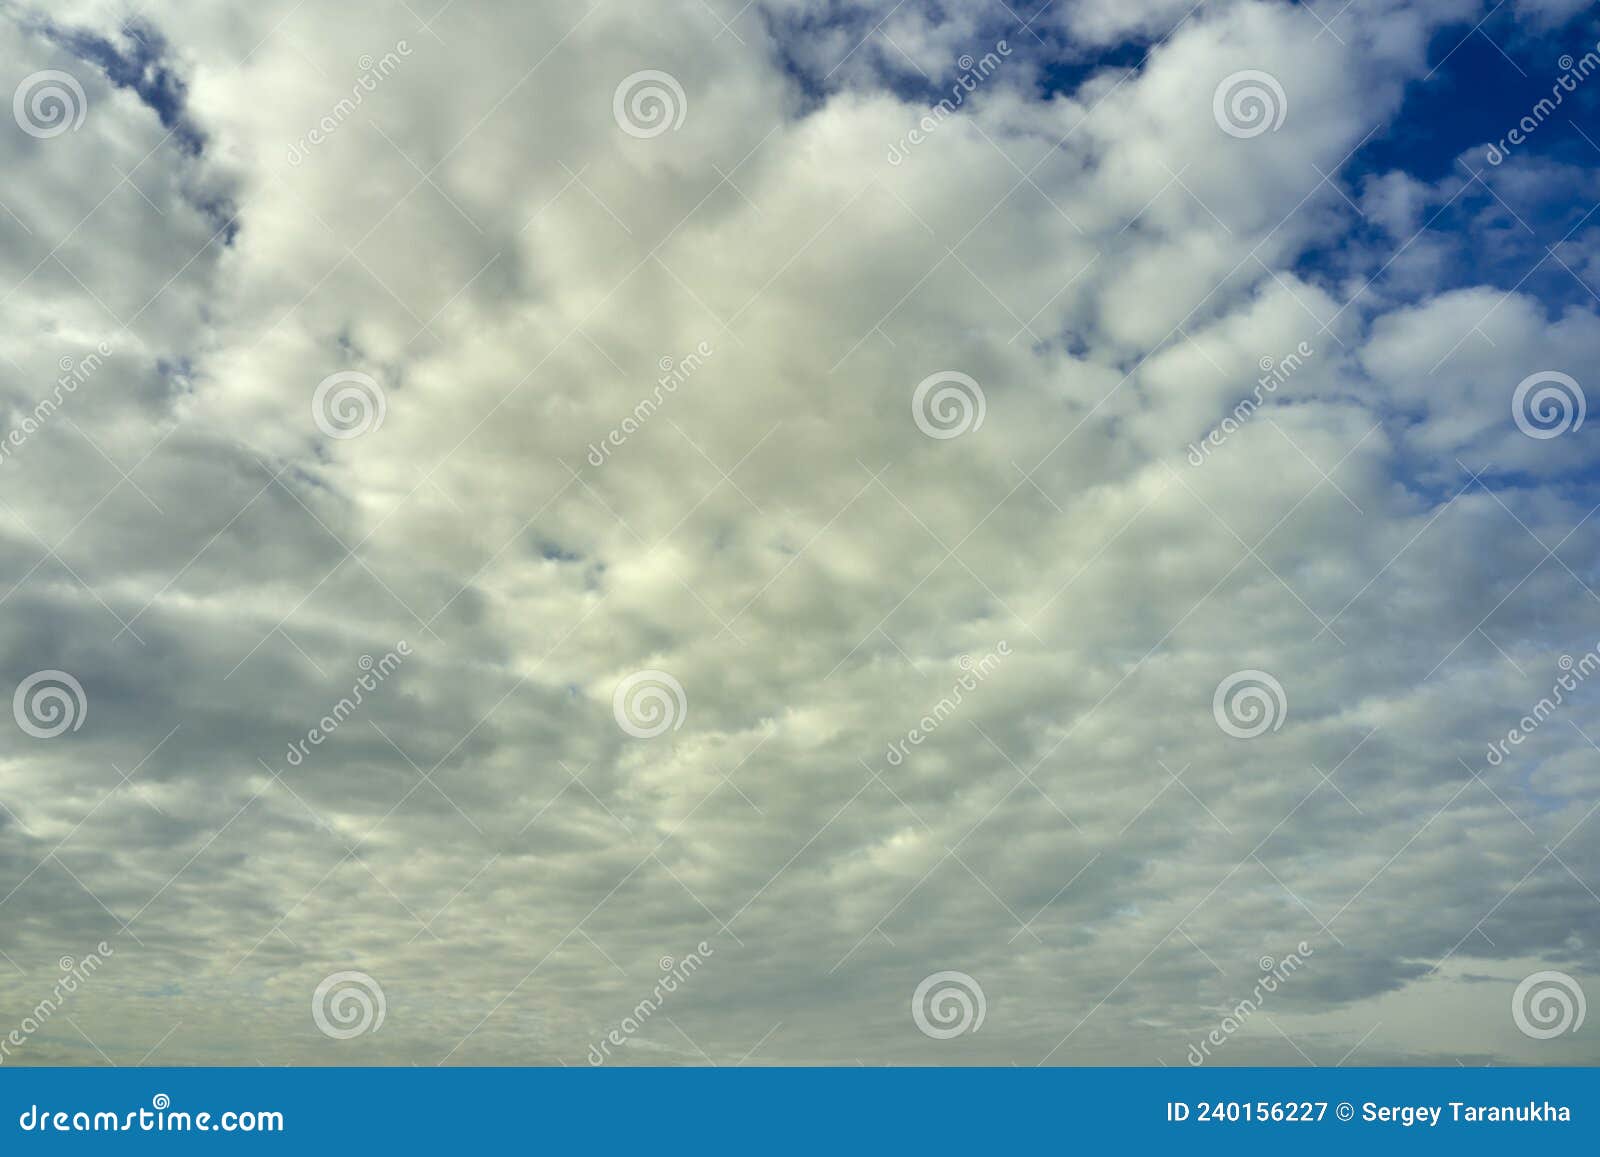 Blue Cloudy Sky on a Sunny Day Background Screensaver Backdrop Stock ...